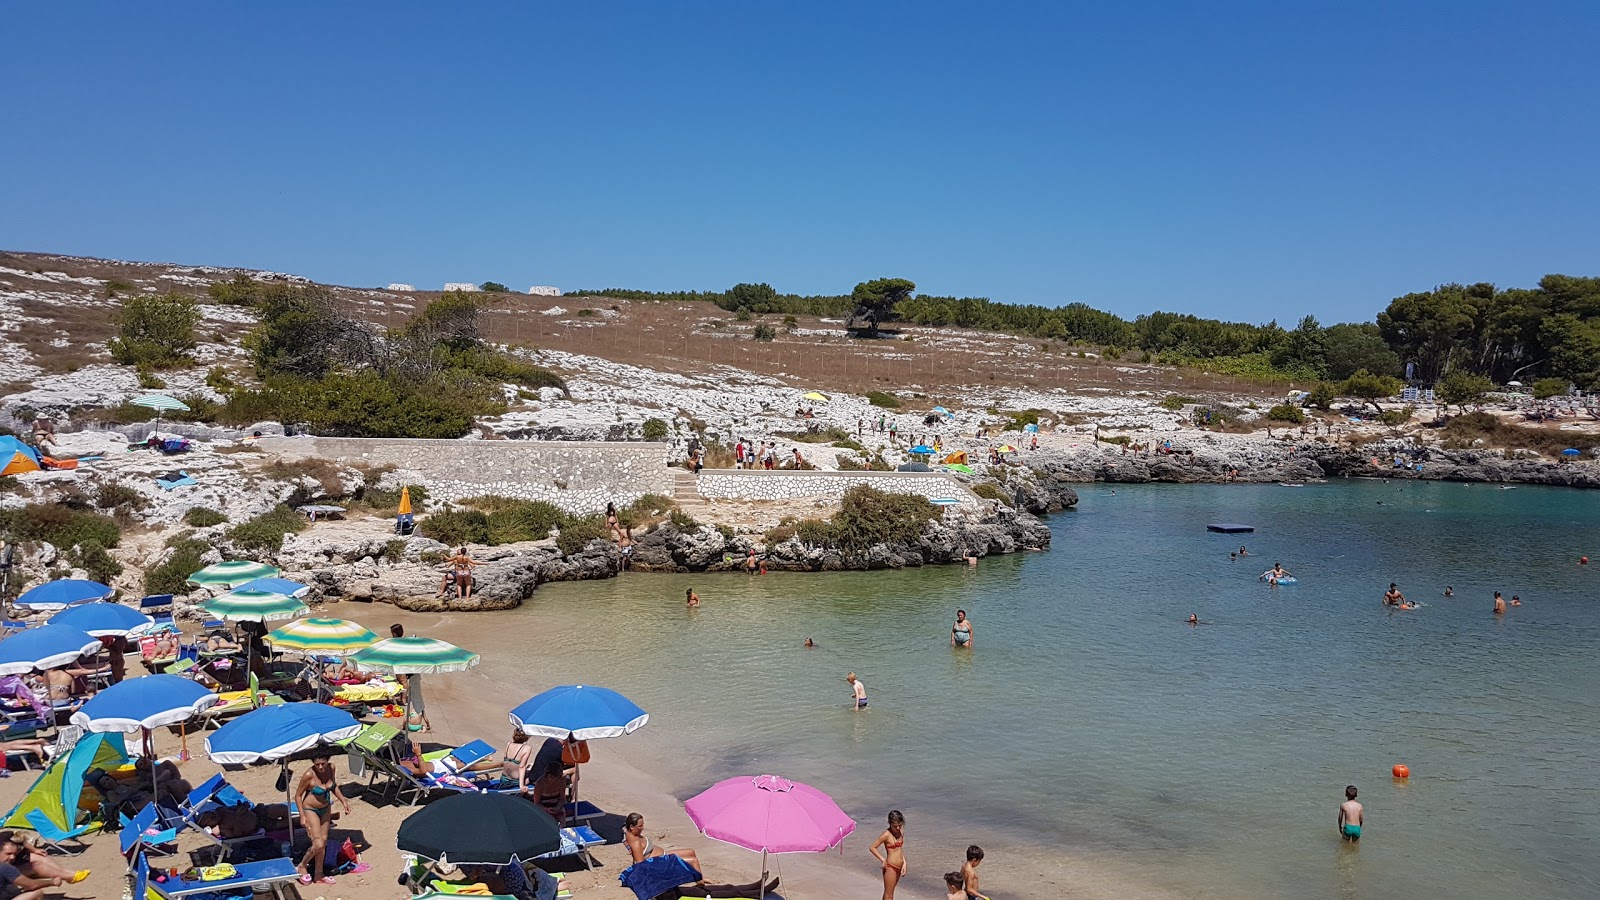 Foto av Spiaggia di Porto Badisco med medium nivå av renlighet